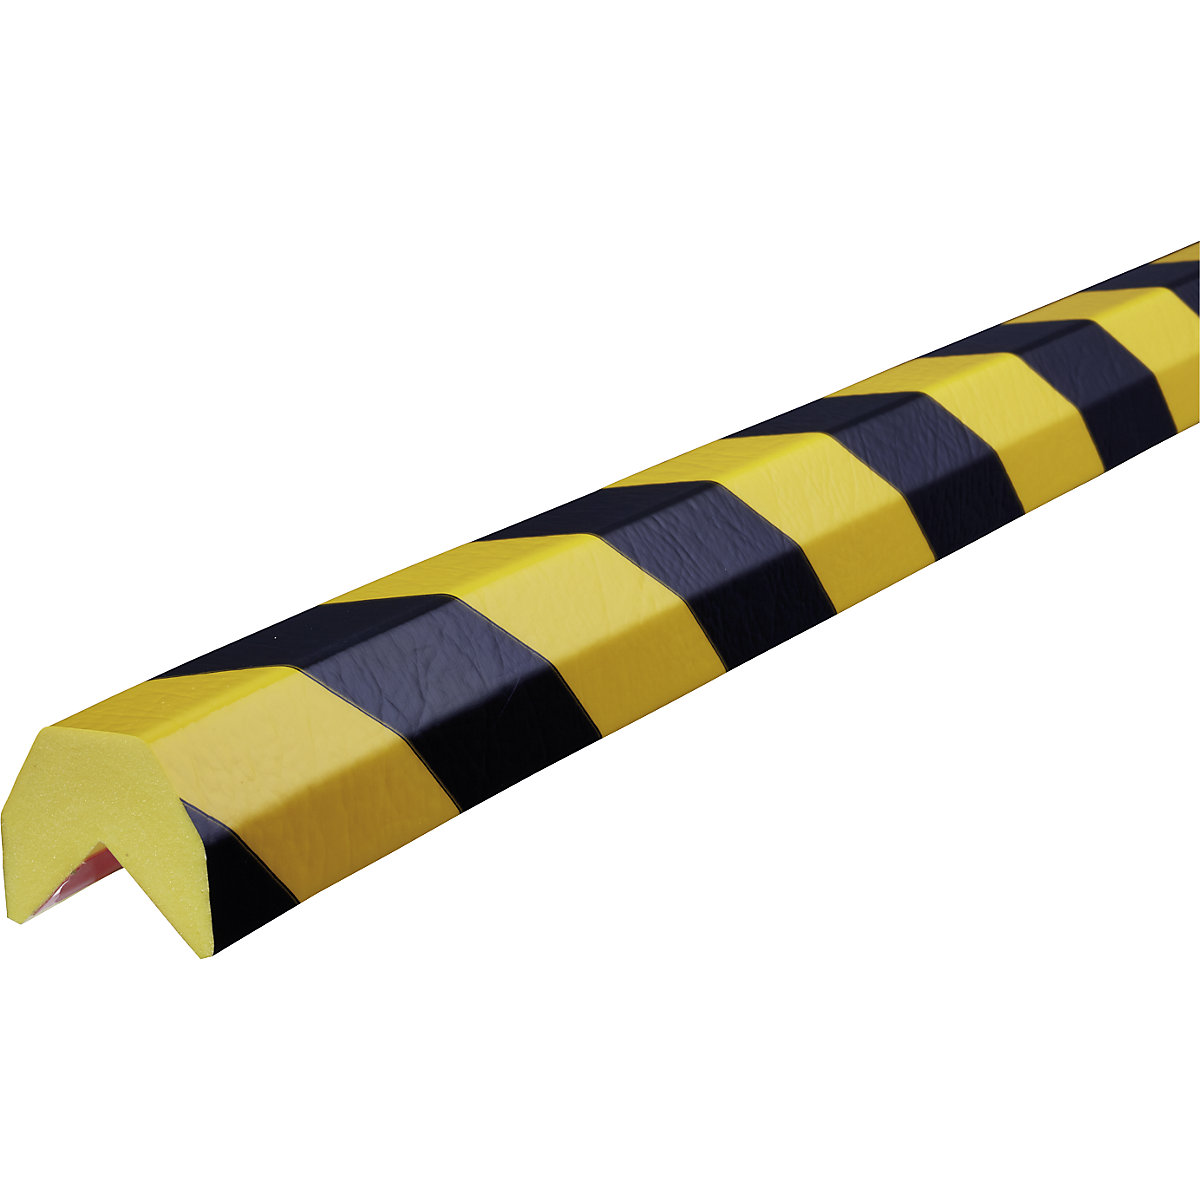 Knuffi® corner protection – SHG, type AA, 1 x 50 m roll, black / yellow-13